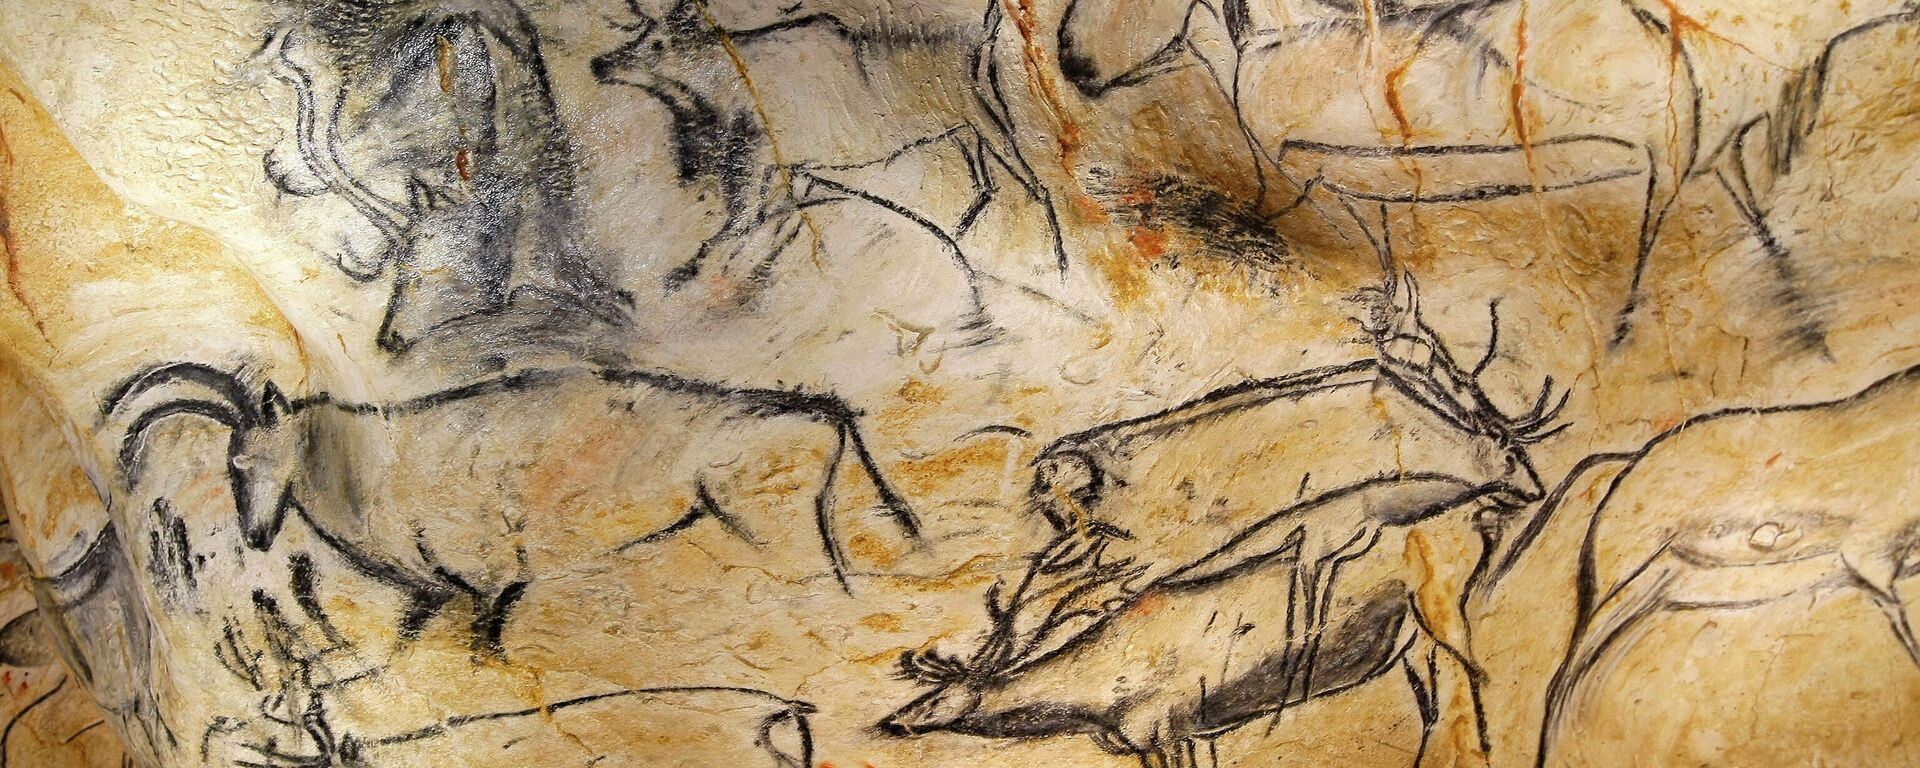 Pintura rupestre en cuevas - Sputnik Mundo, 1920, 09.04.2021